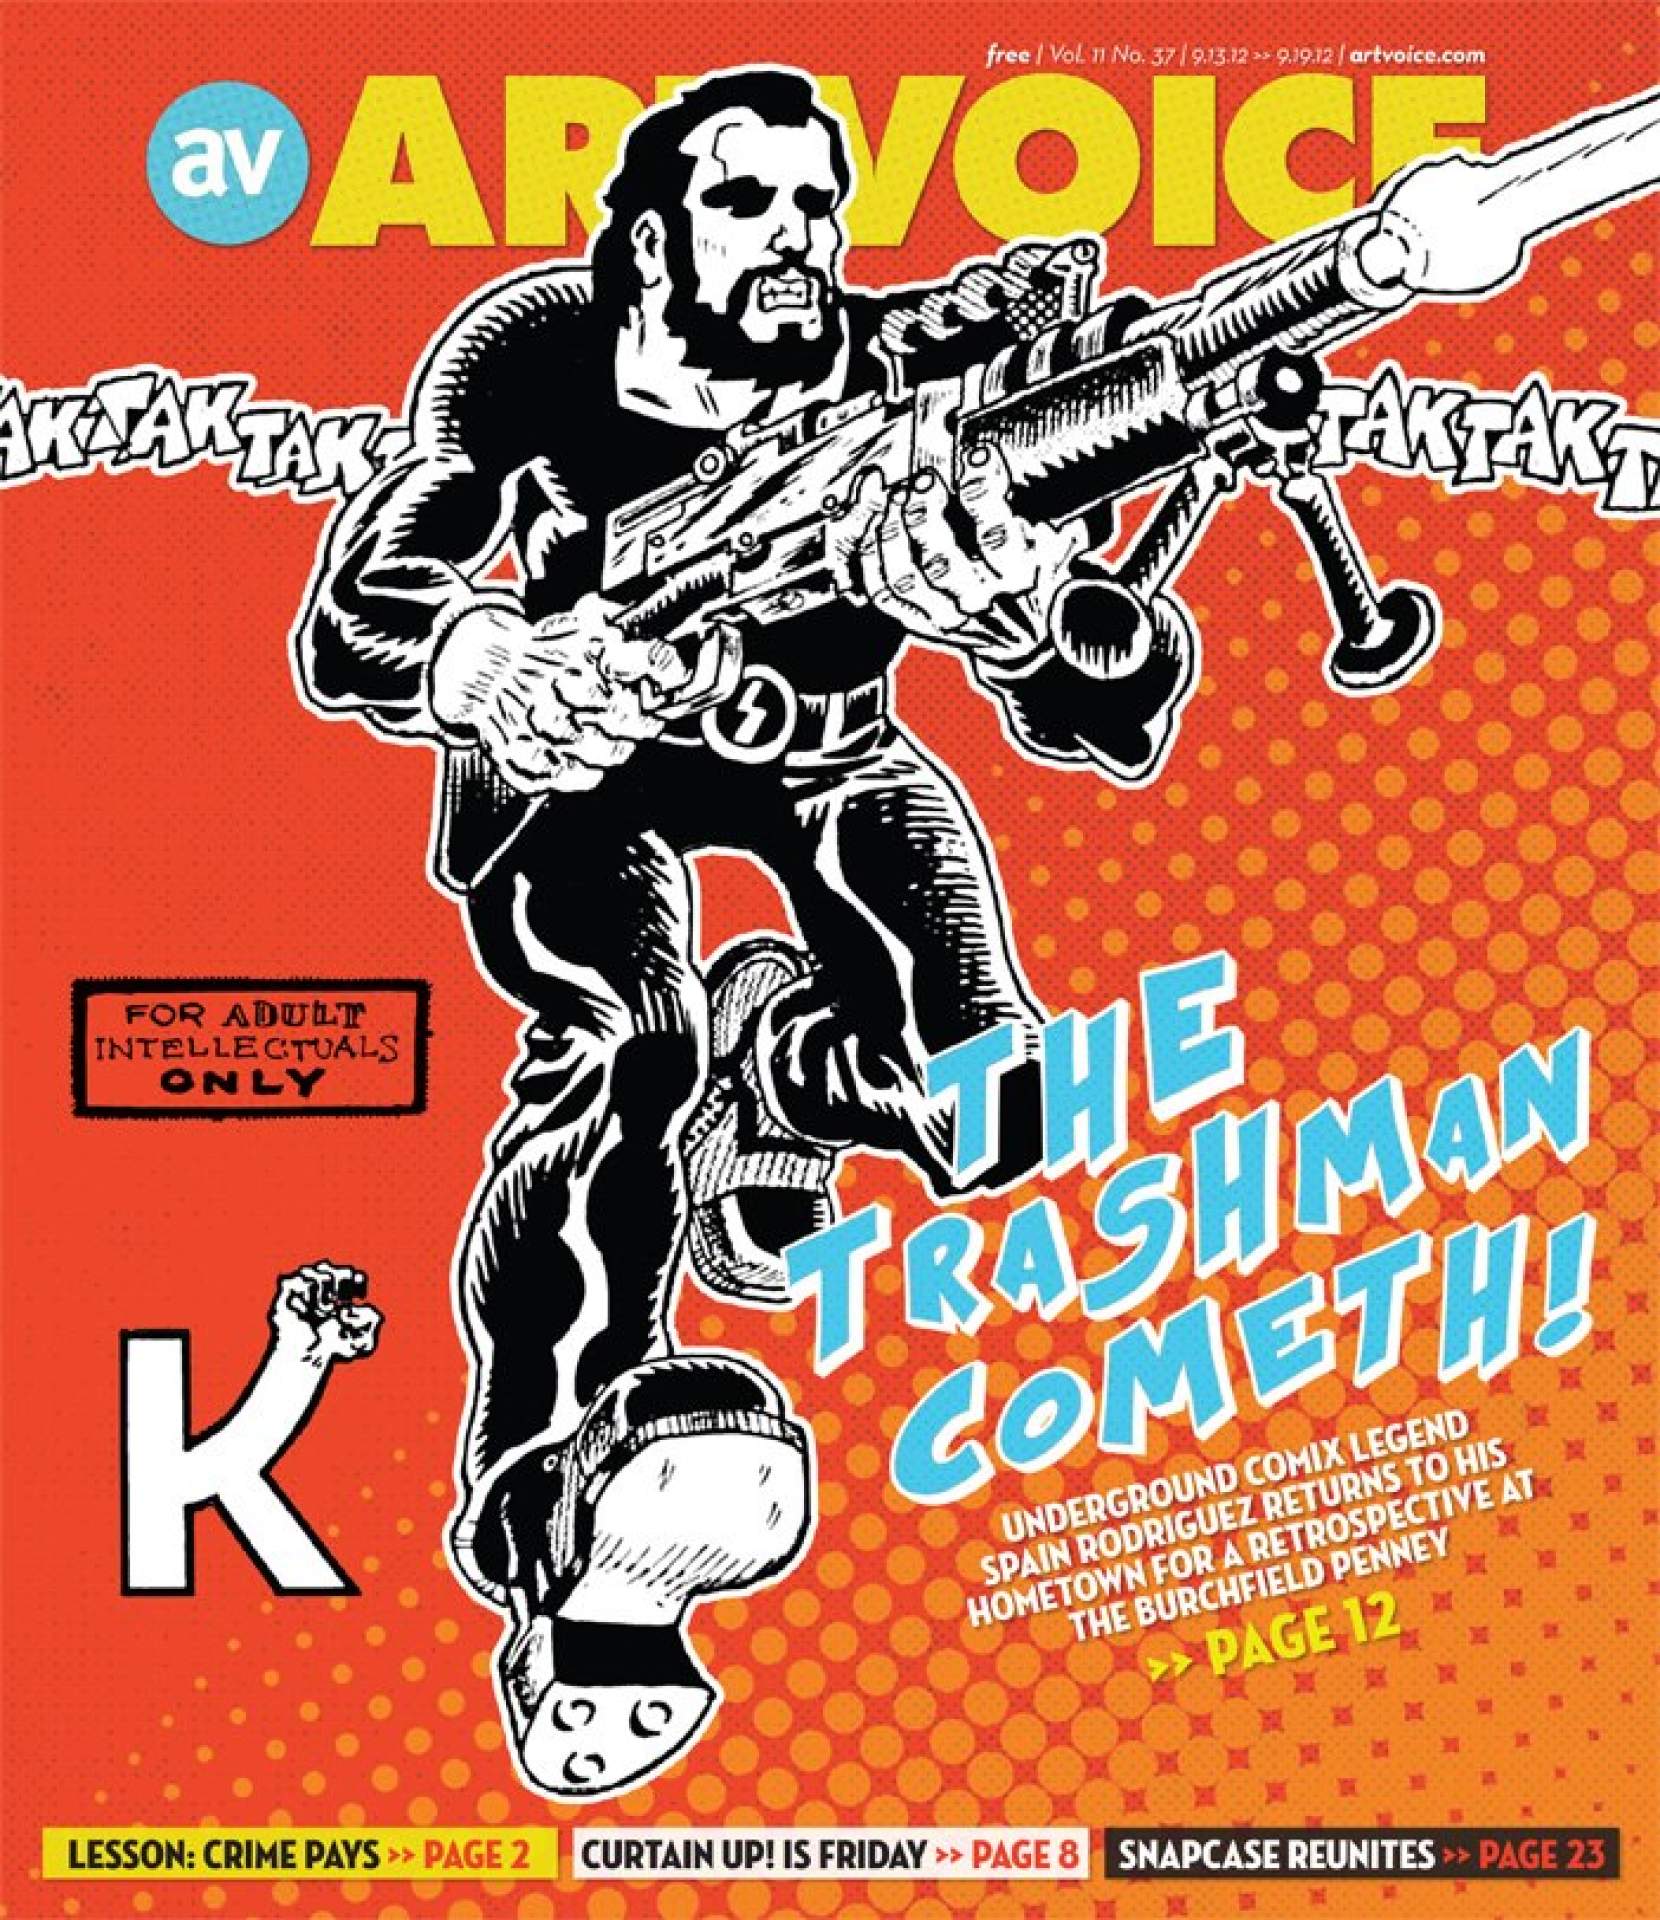 Trashman on the cover of Artvoice